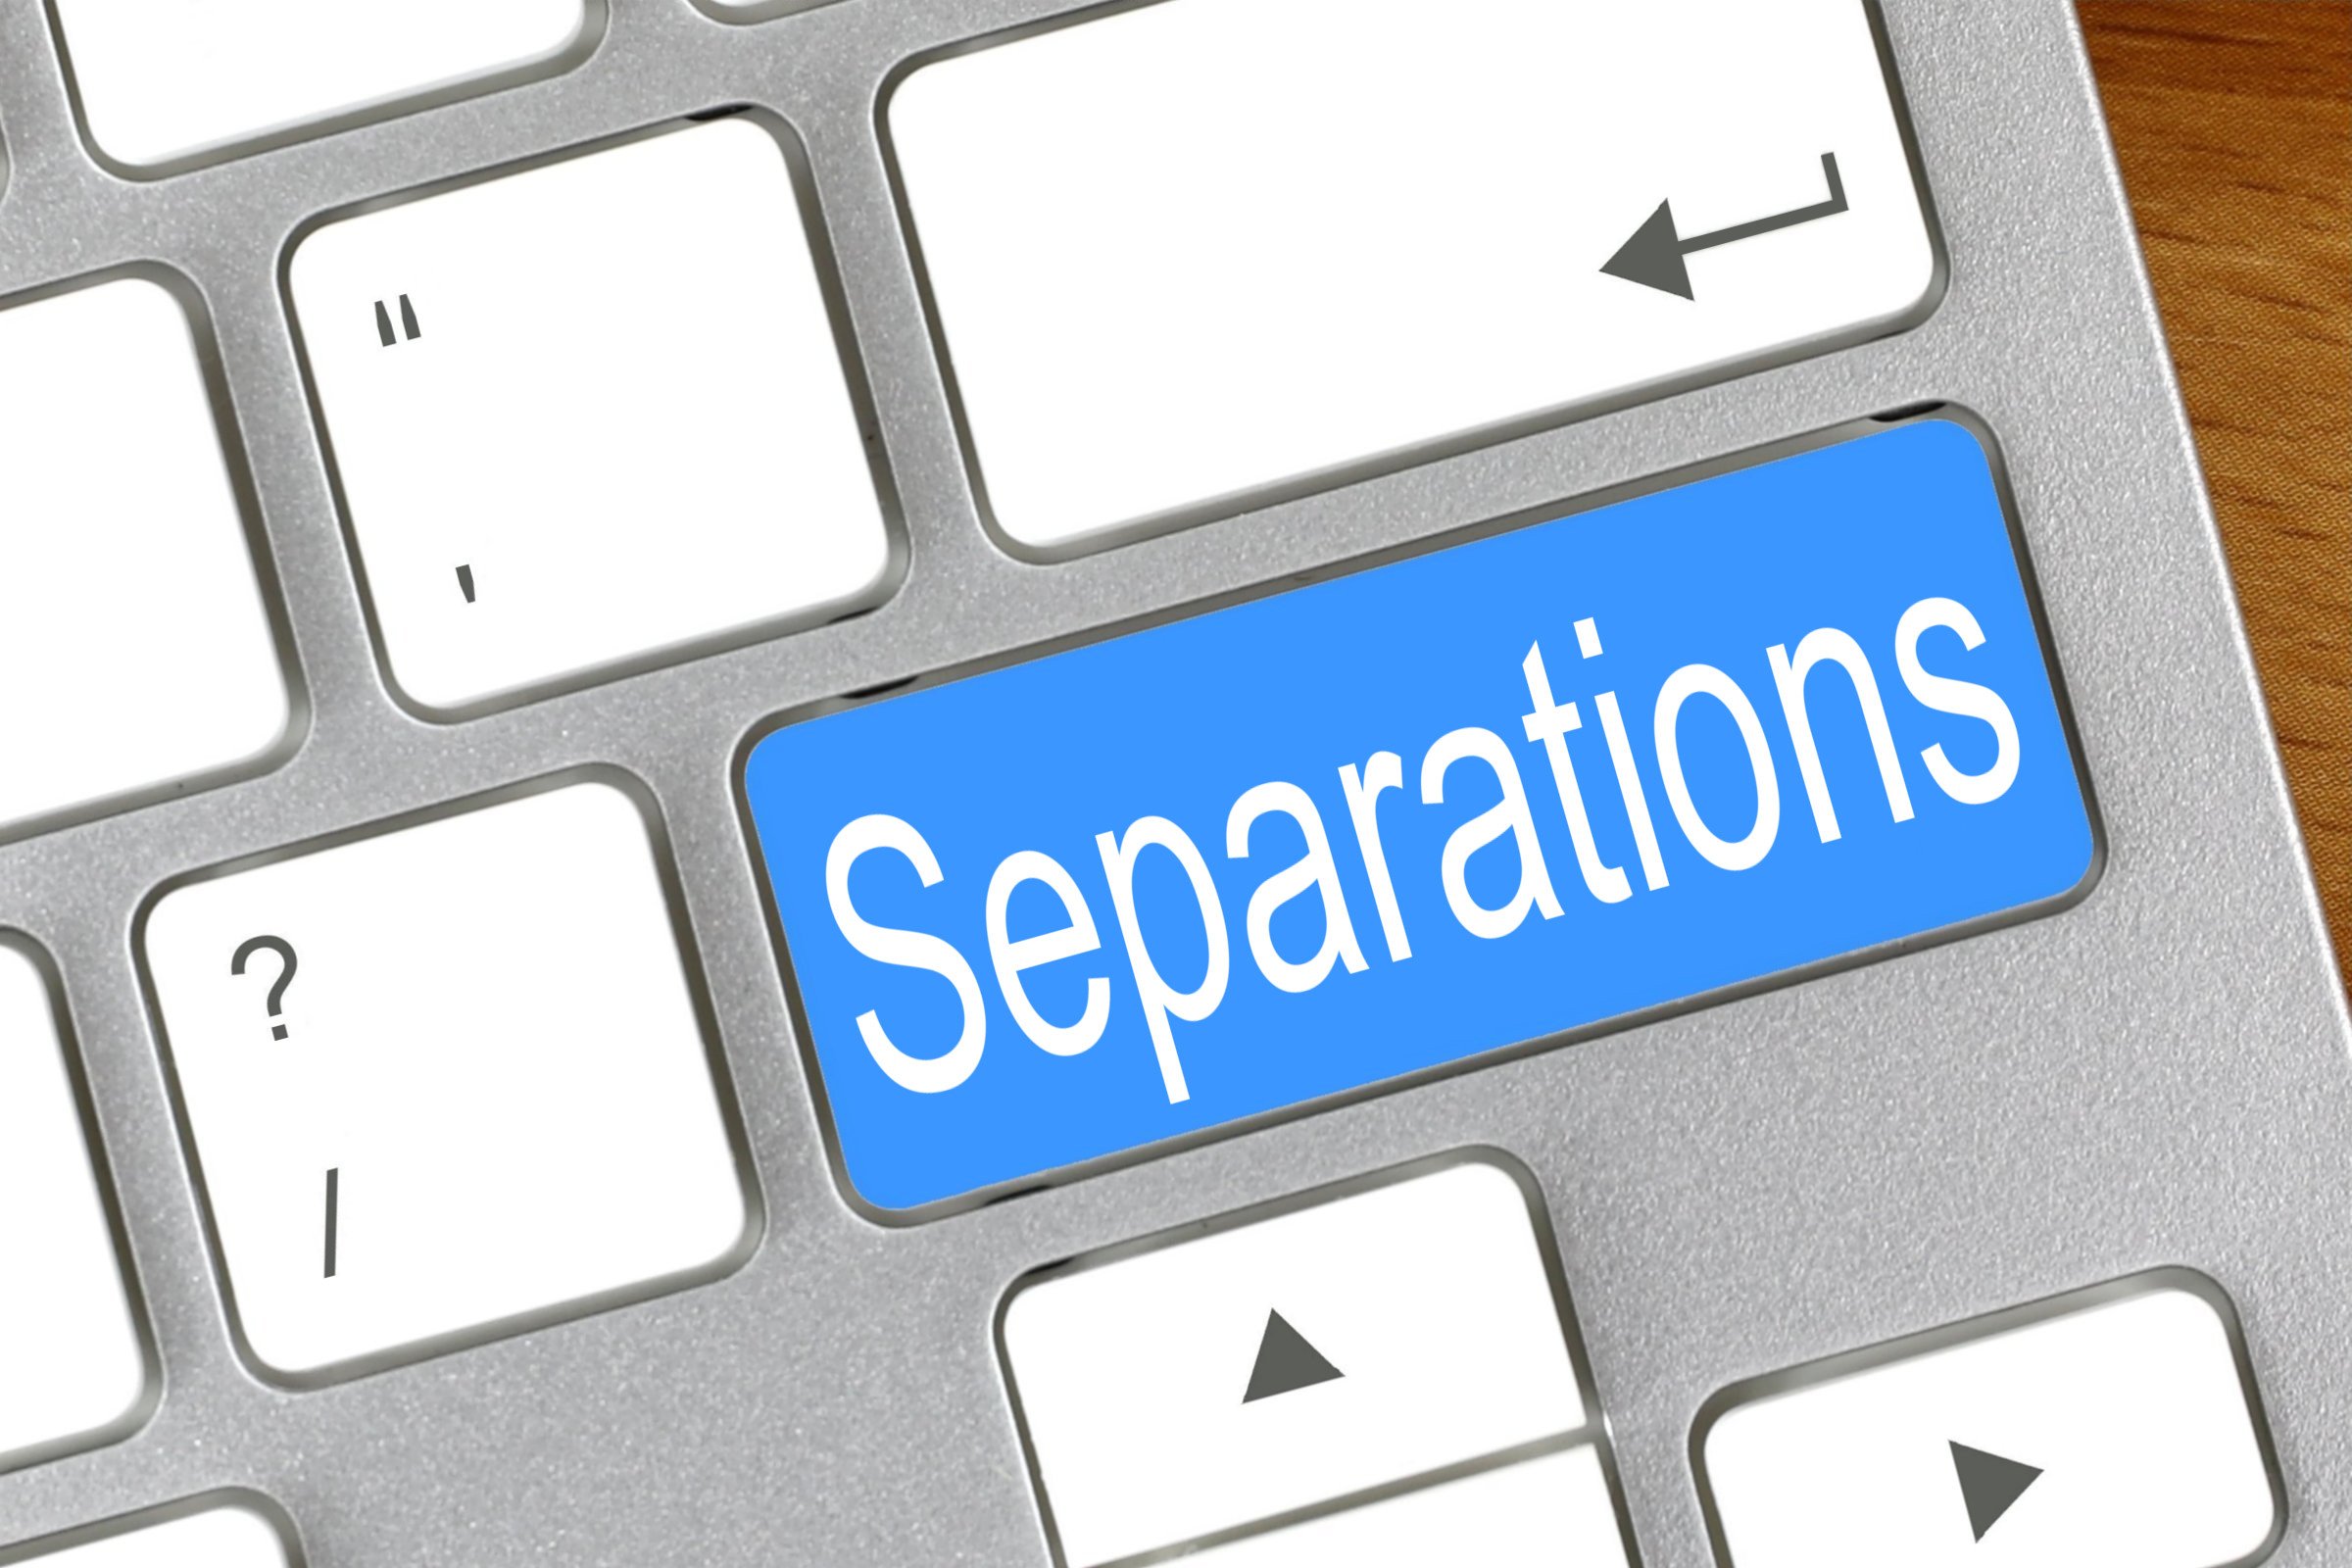 separations